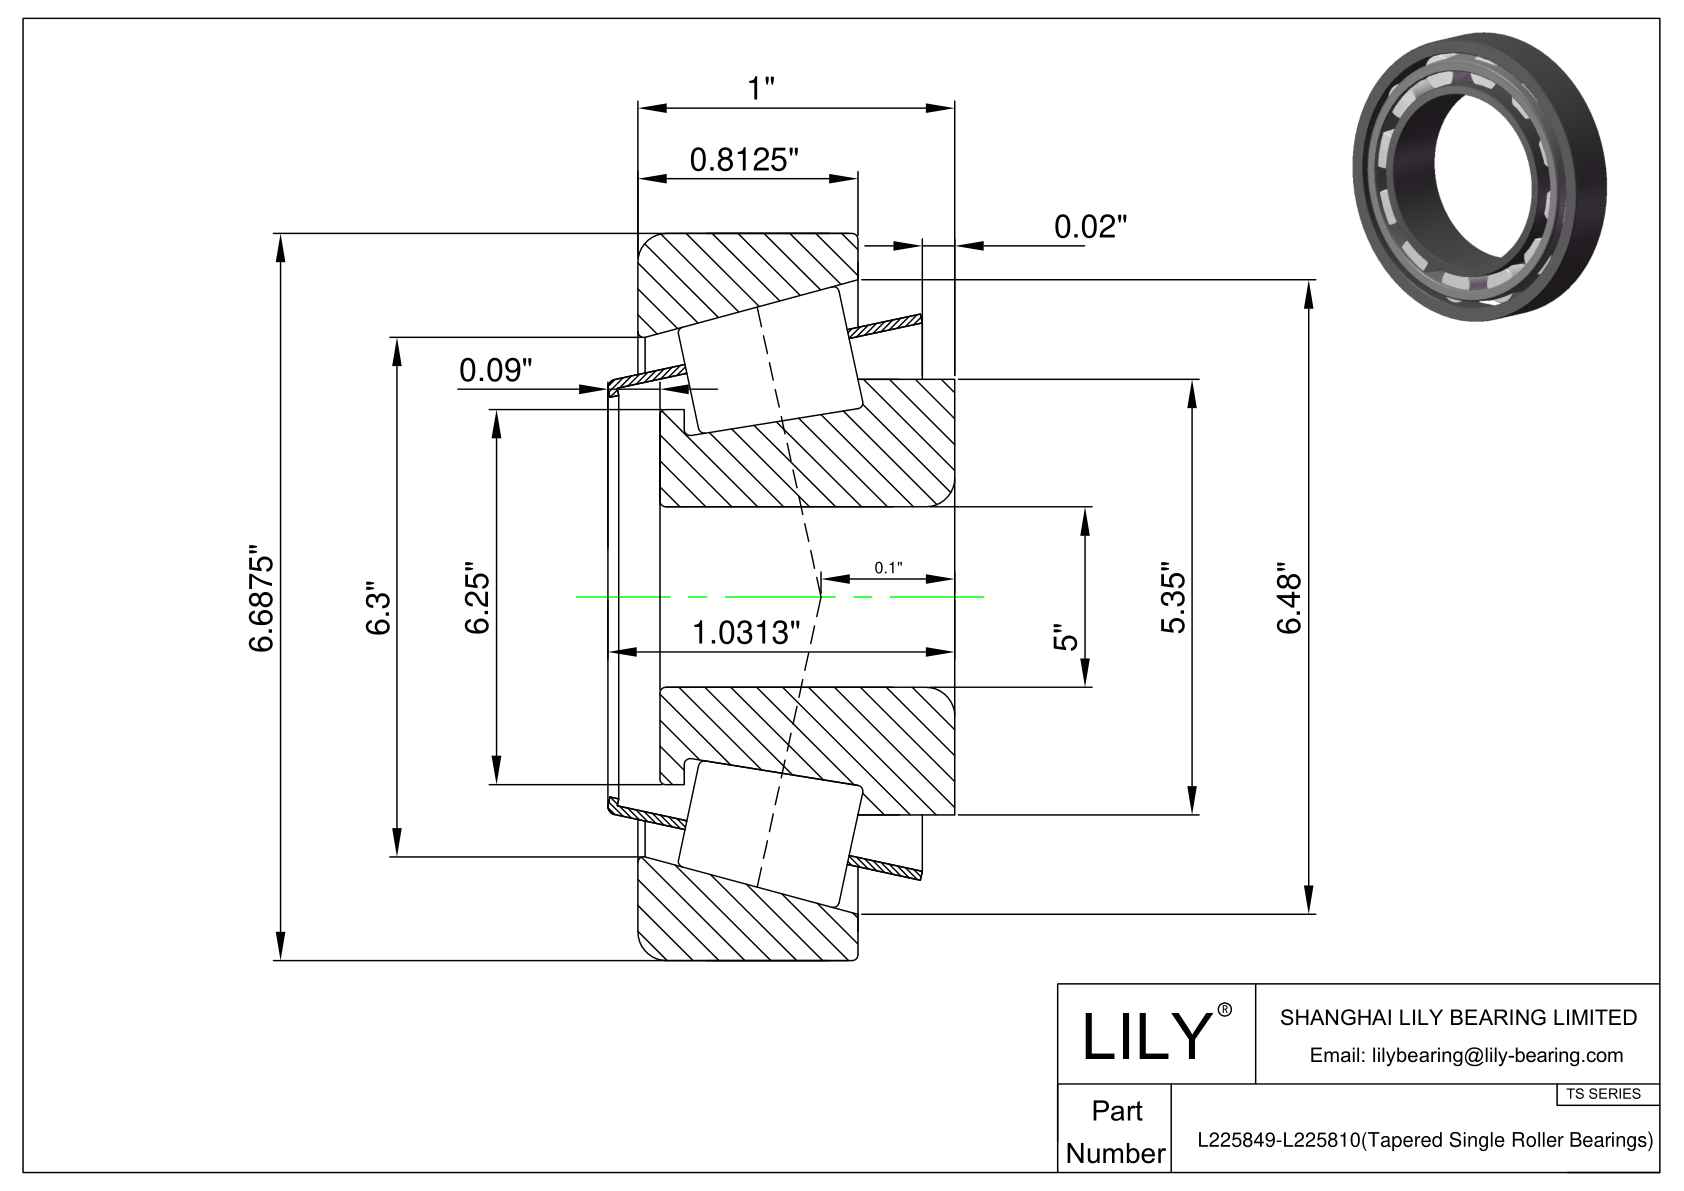 L225849-L225810 TS系列(圆锥单滚子轴承)(英制) CAD图形